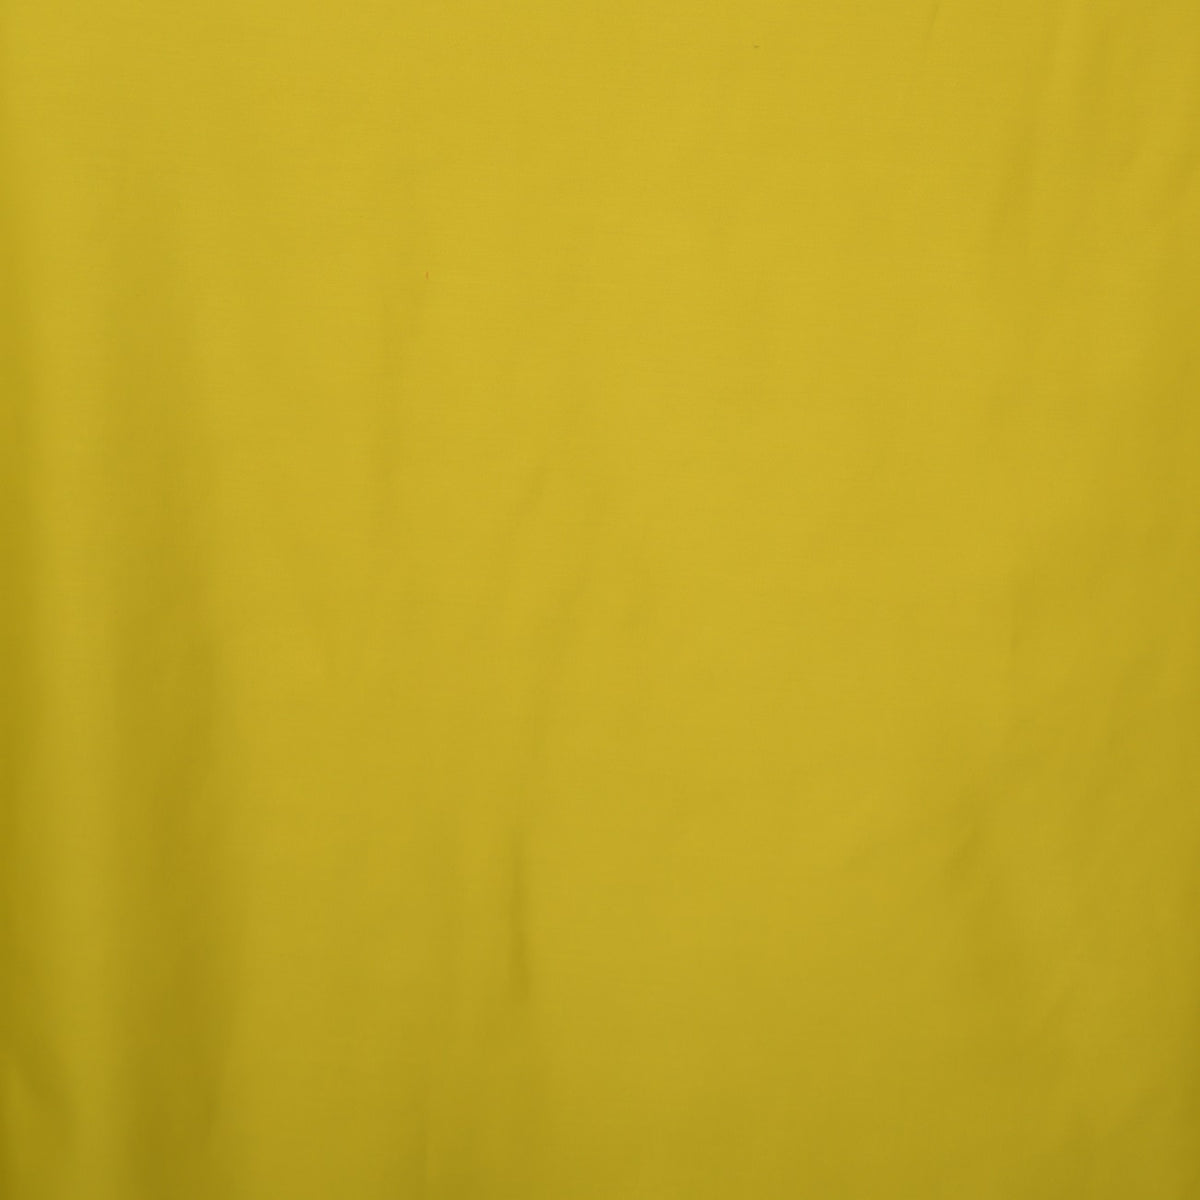 Night curtain yellow green soft